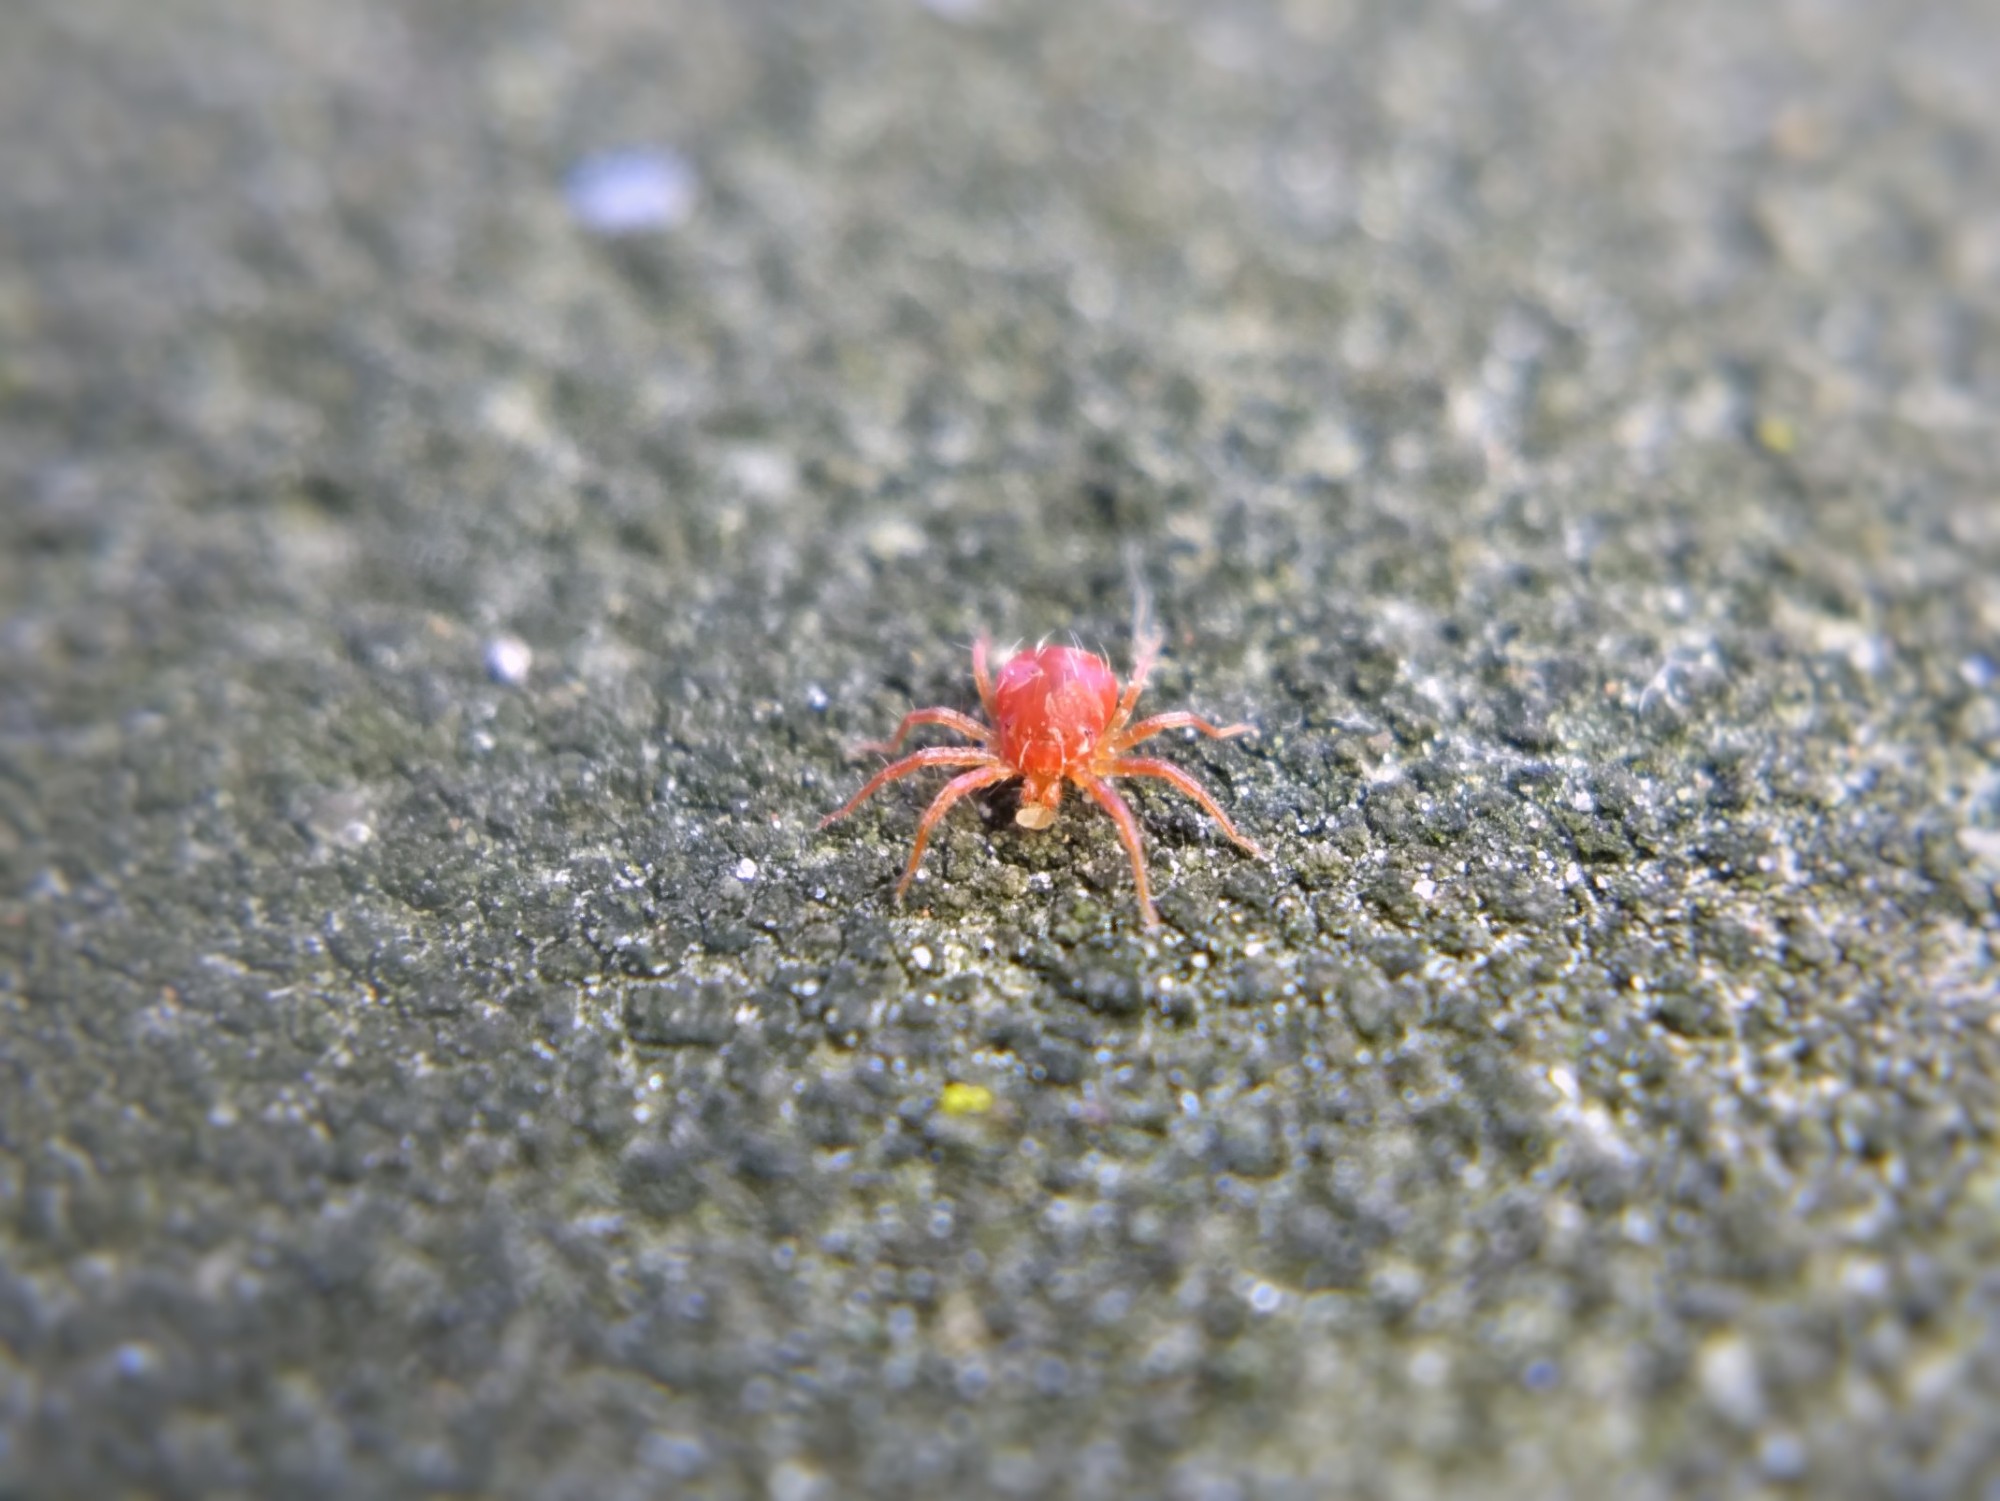 Macro photo of a red whirligig mite on stone/concrete, feeding on some tiny whitish thing.